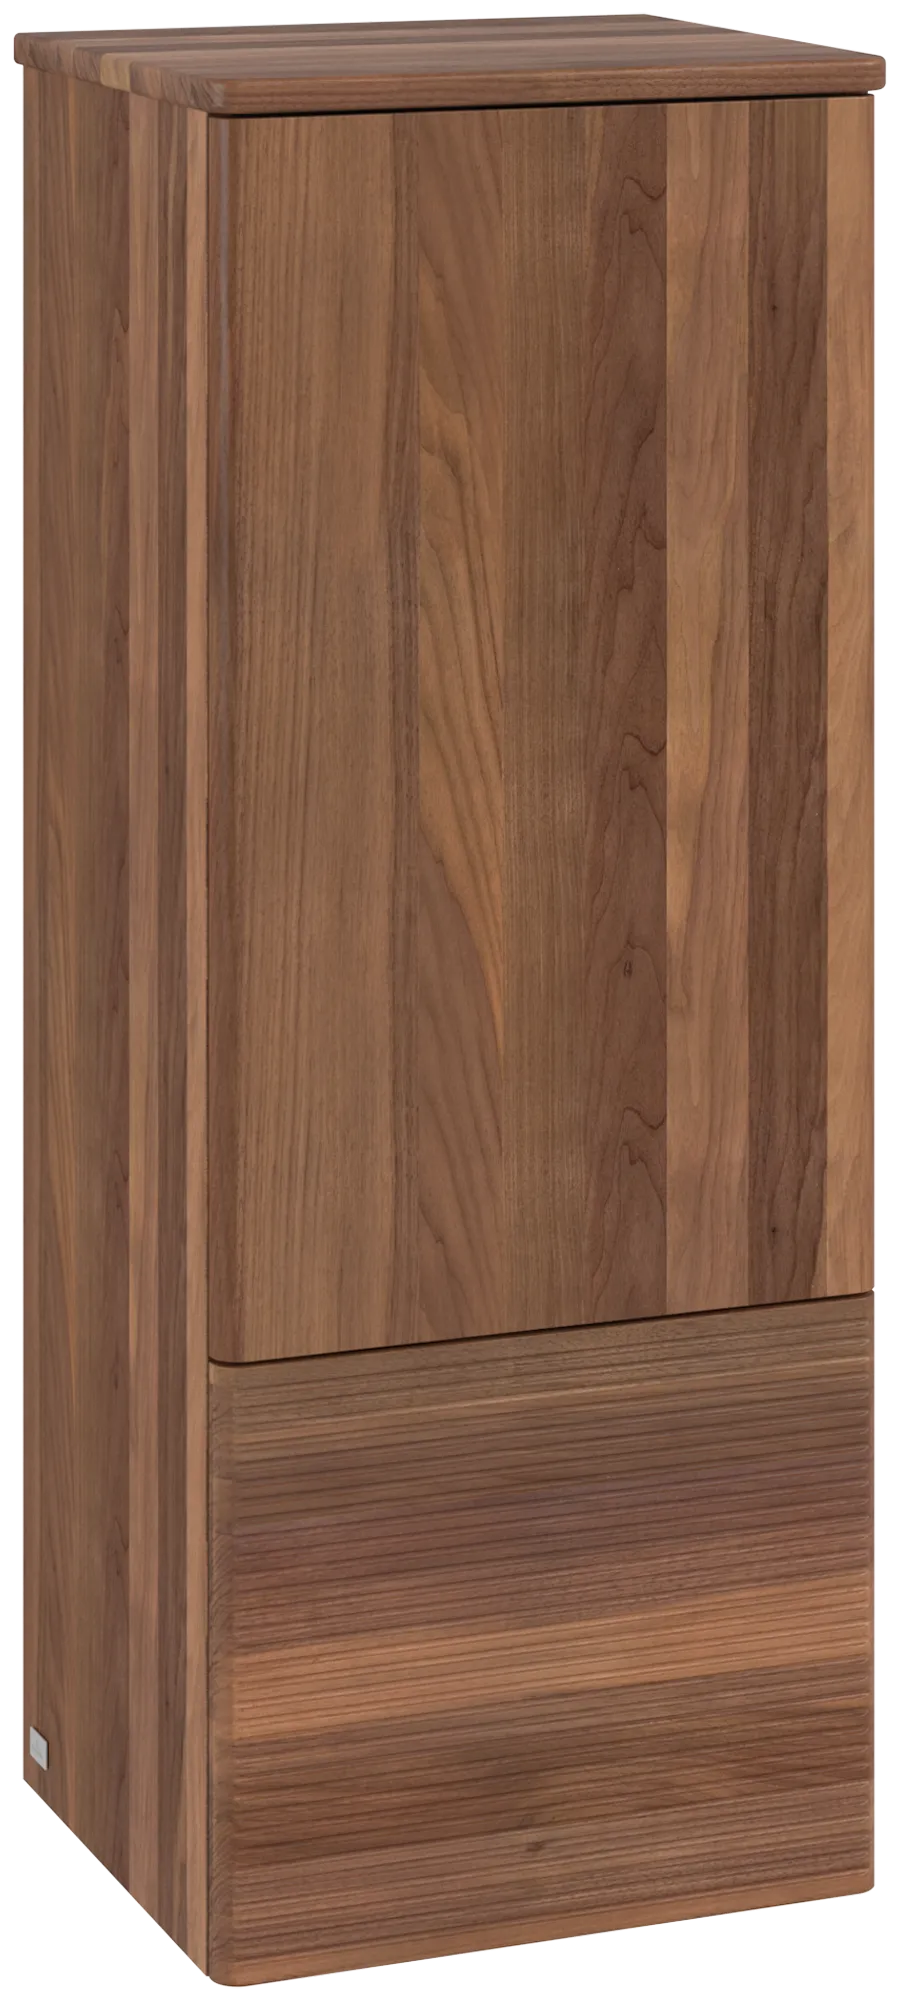 Obrázek VILLEROY BOCH Antao Medium-height cabinet, 1 door, 414 x 1039 x 356 mm, Front with grain texture, Warm Walnut / Warm Walnut #K43100HM